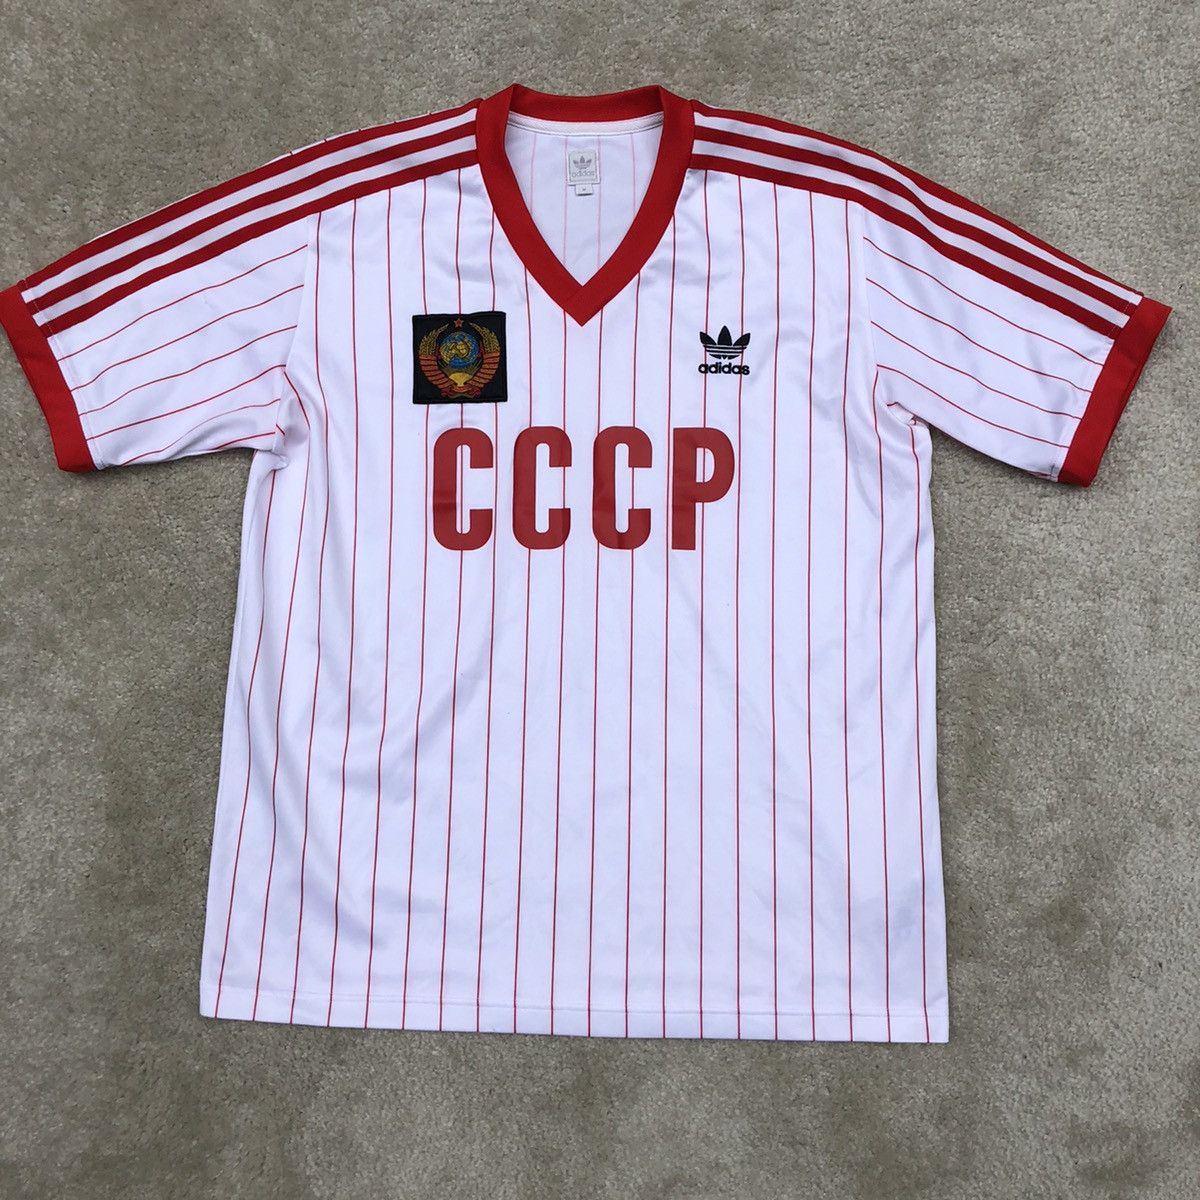 Van streek Inconsistent schelp Adidas CCCP Soviet Union Russian Football Soccer Jersey | Grailed